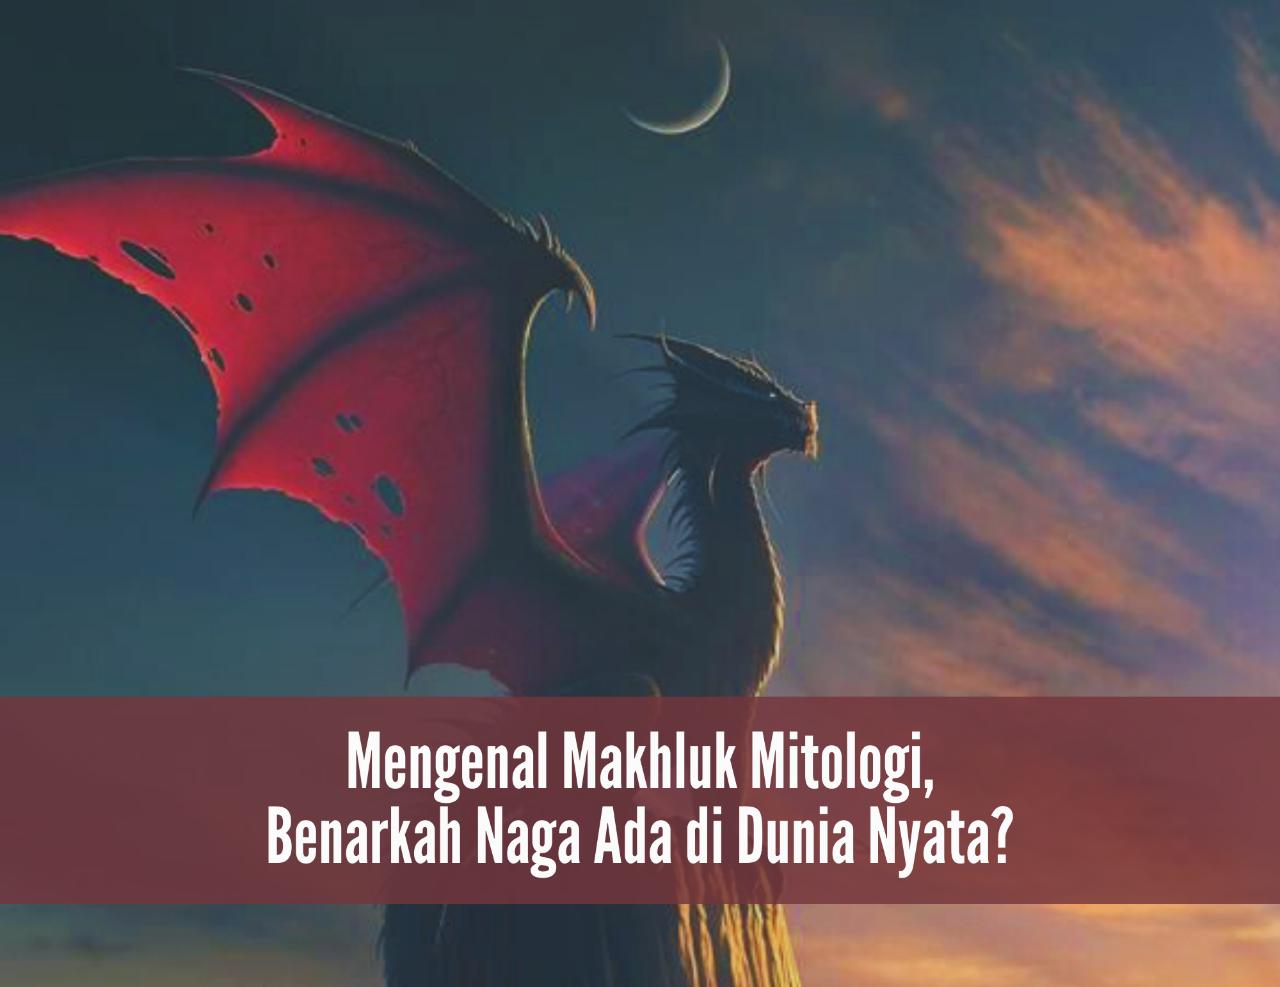 Mengenal Makhluk Mitologi, Benarkah Naga Ada di Dunia Nyata?